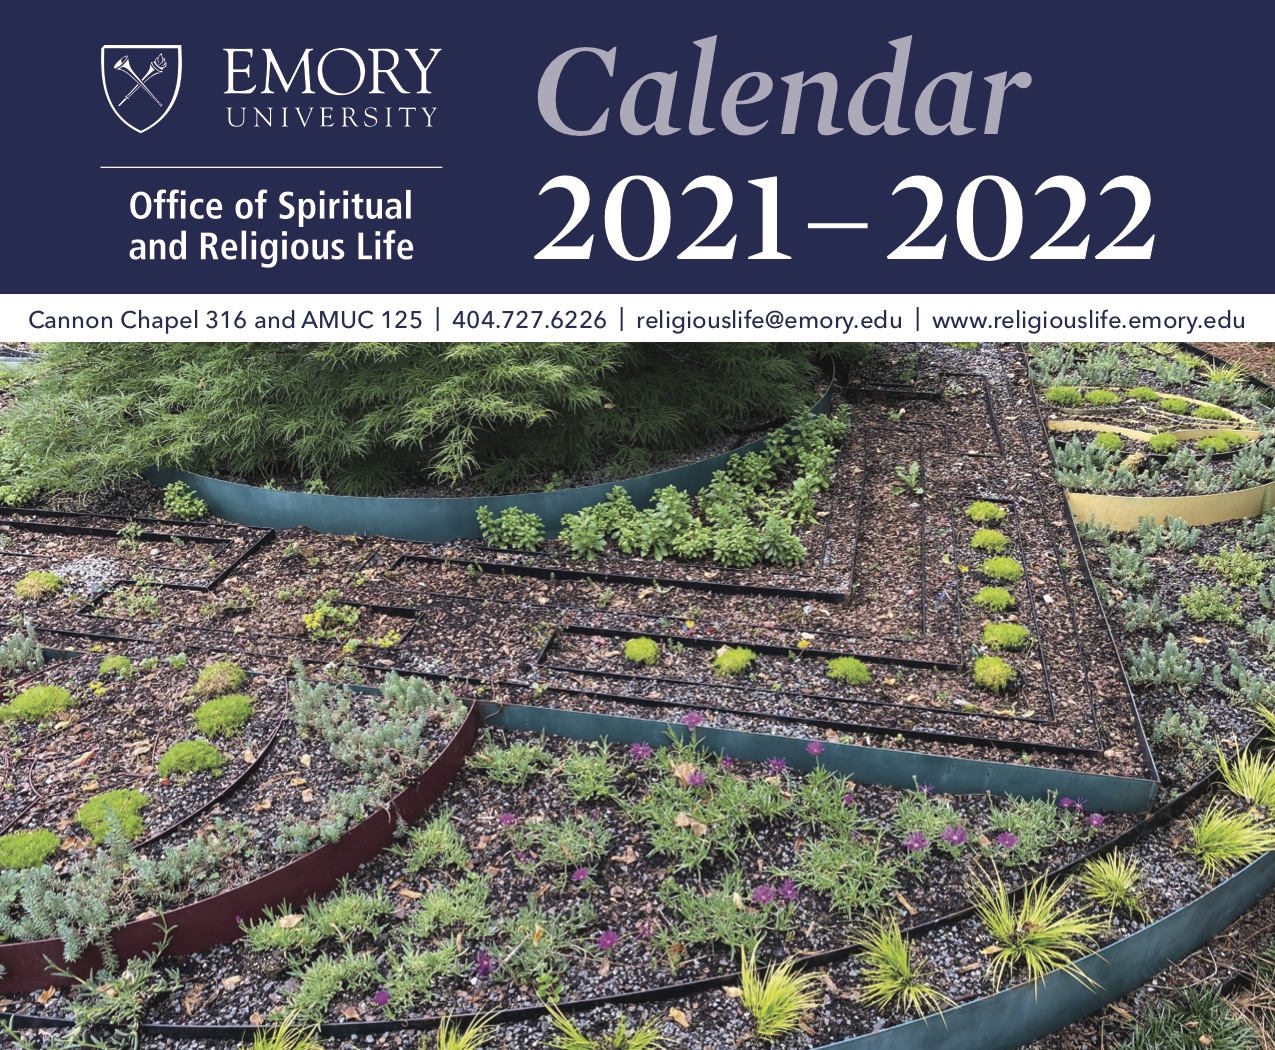 Emory University Calendar 2022 Osrl Calendar 2021-2022 | Emory University | Atlanta Ga